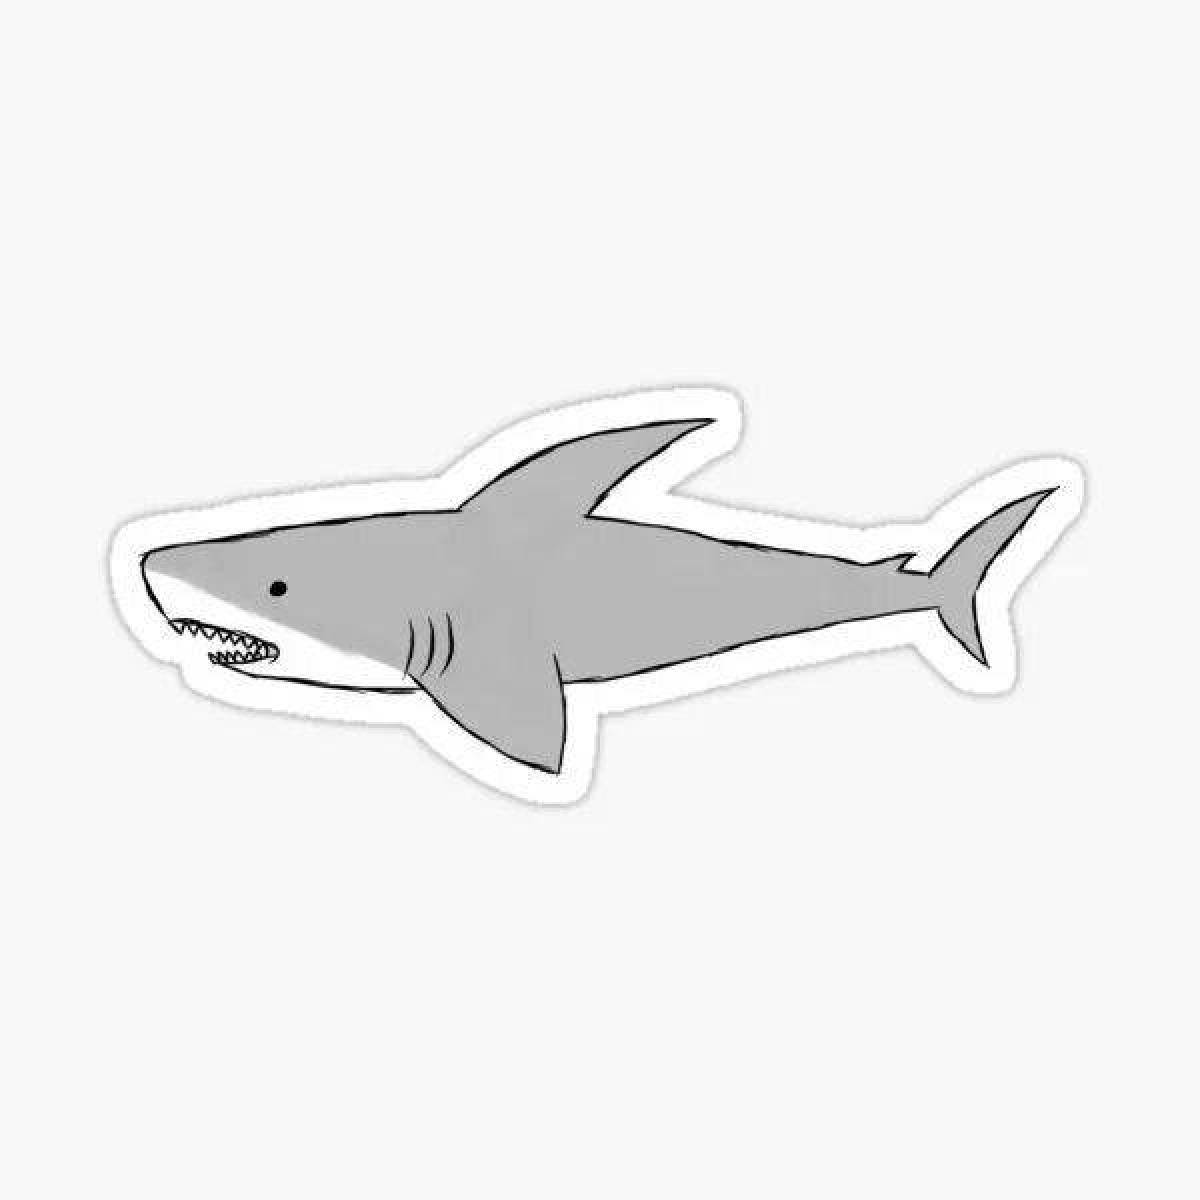 Фантастическая раскраска акула от икеа